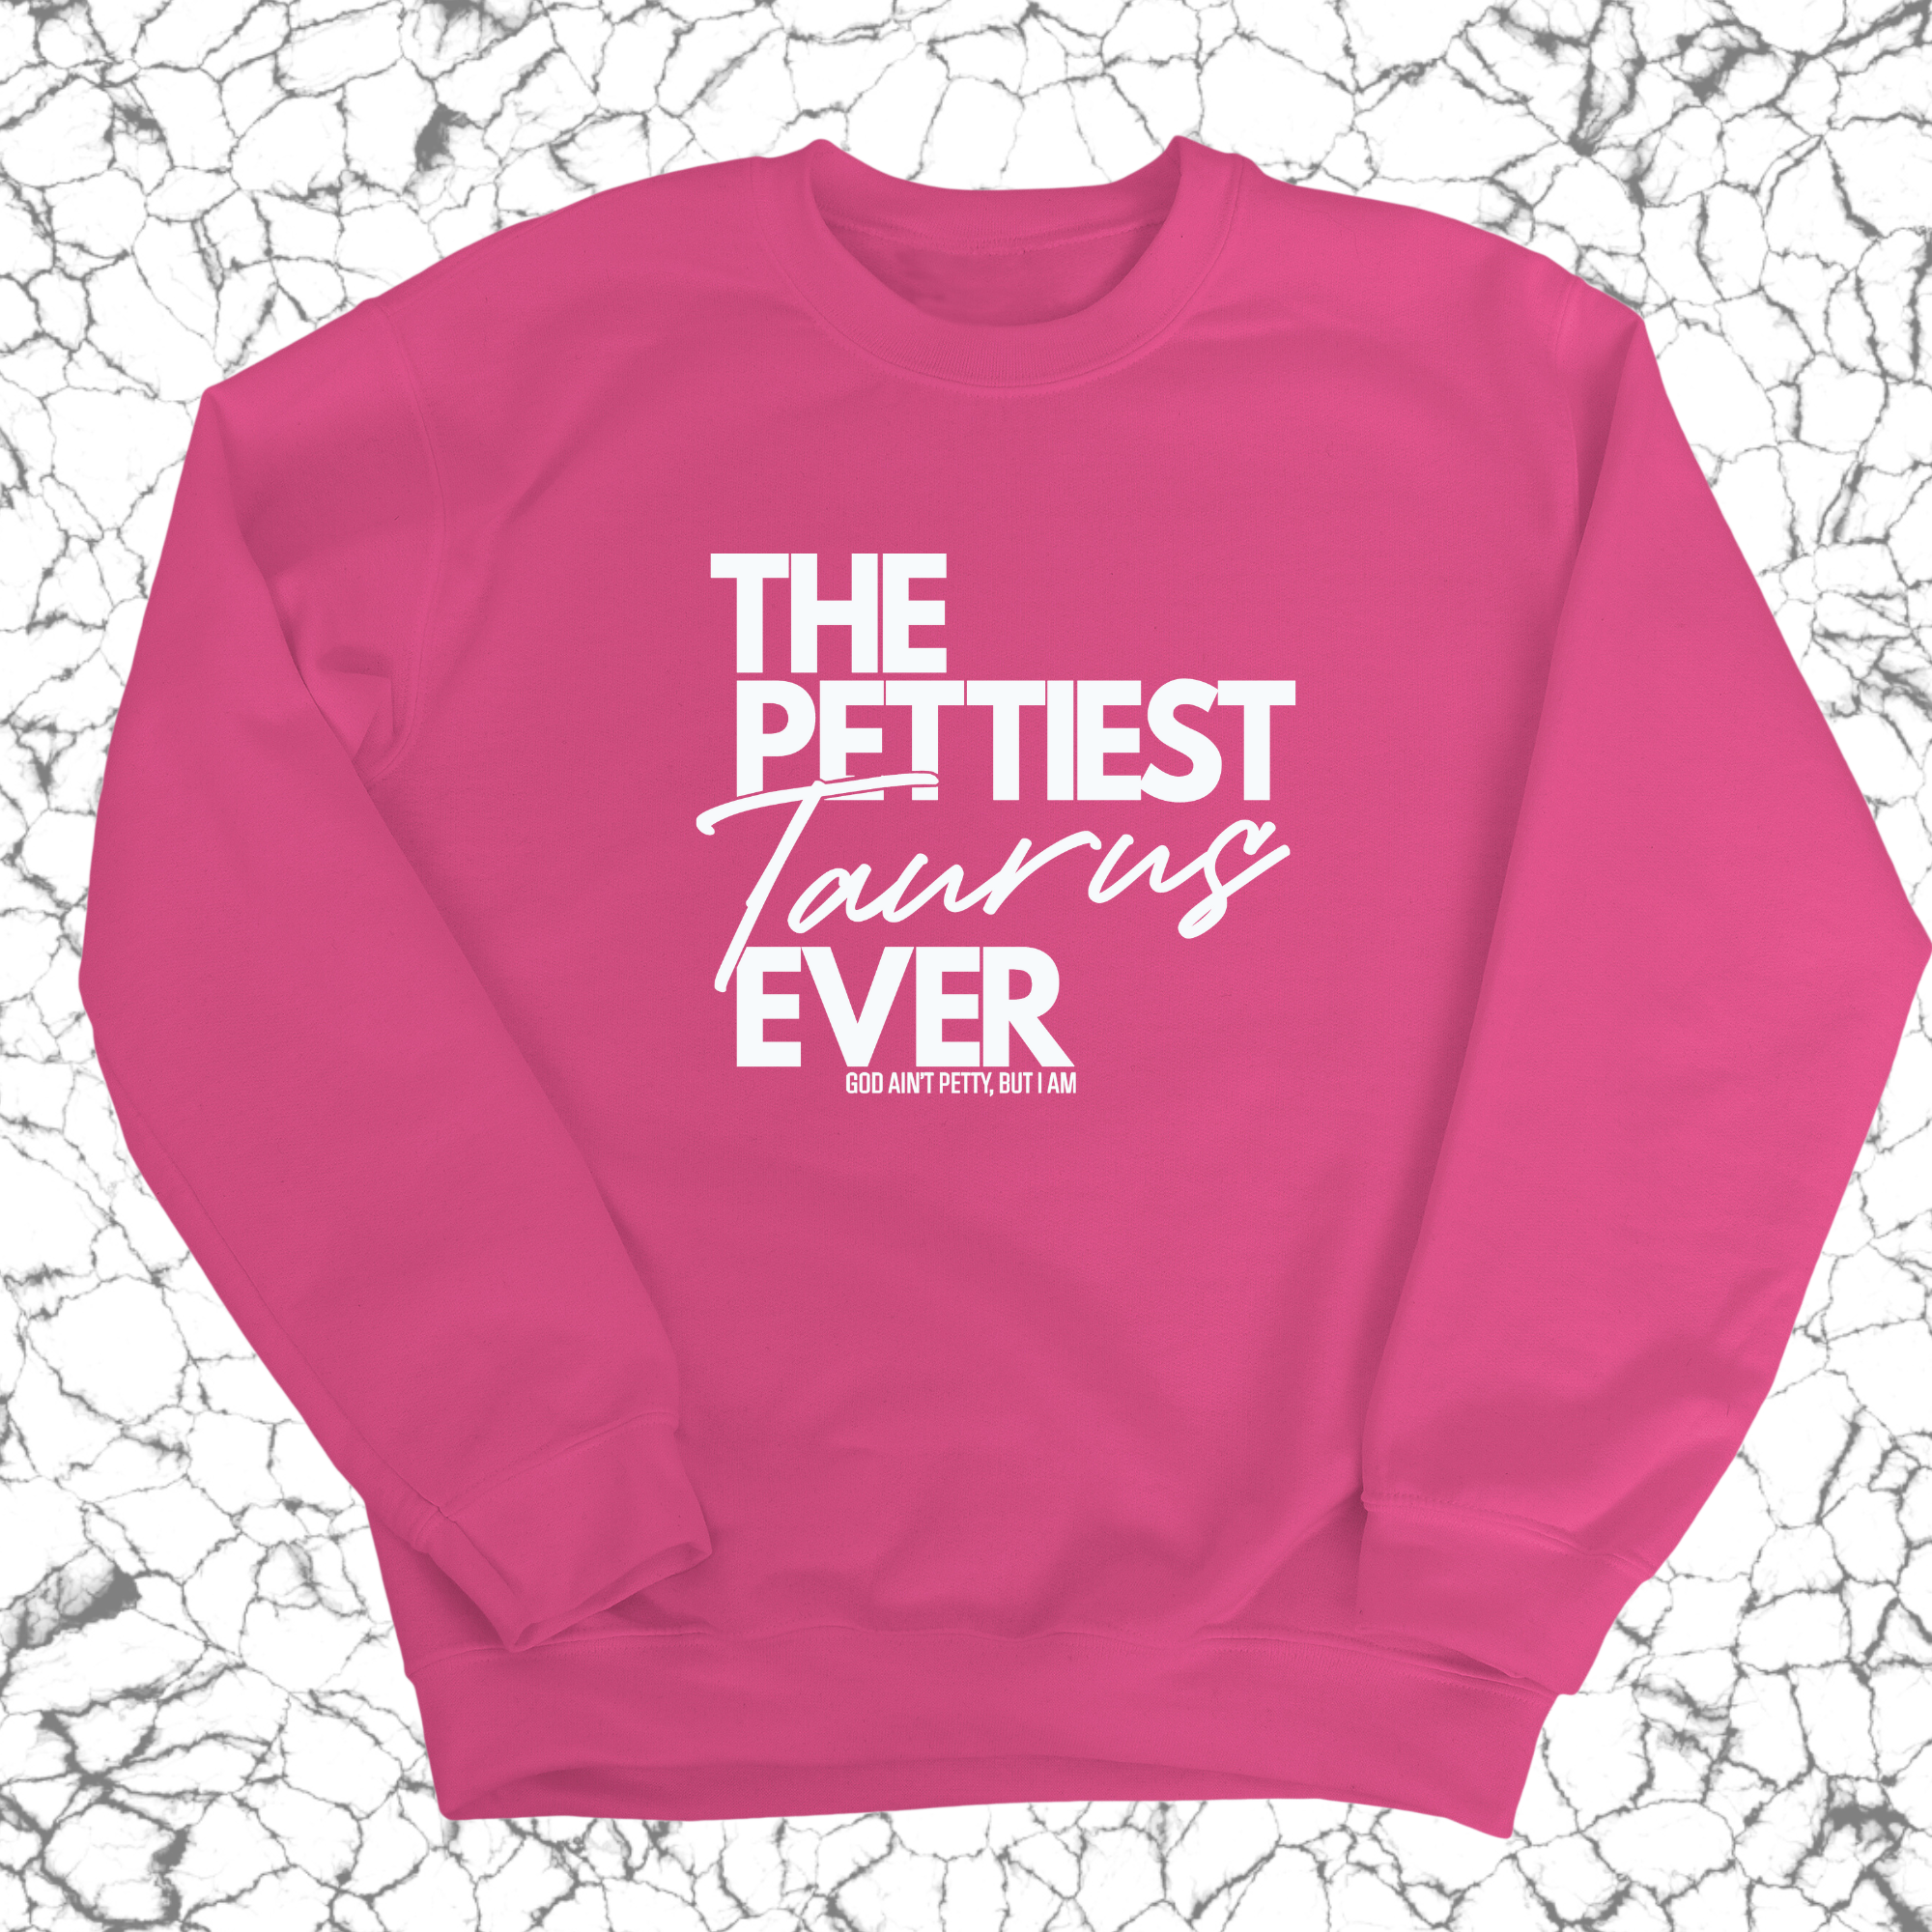 The Pettiest Taurus Ever Unisex Sweatshirt-Sweatshirt-The Original God Ain't Petty But I Am